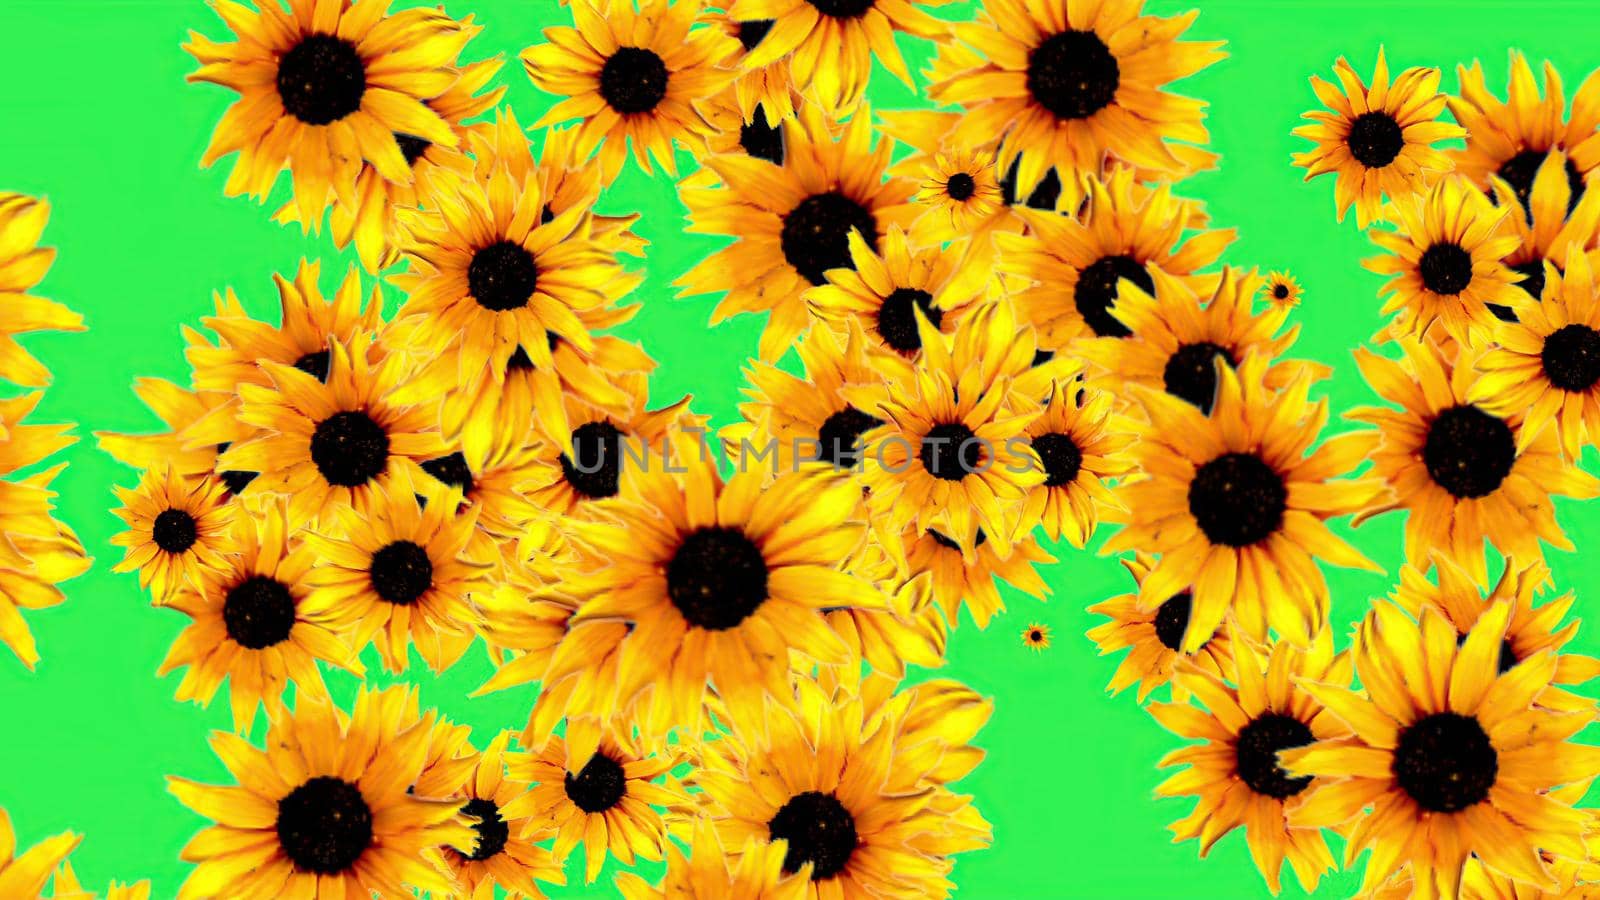 3d illustration - Sunflowers background pattern on green screen 